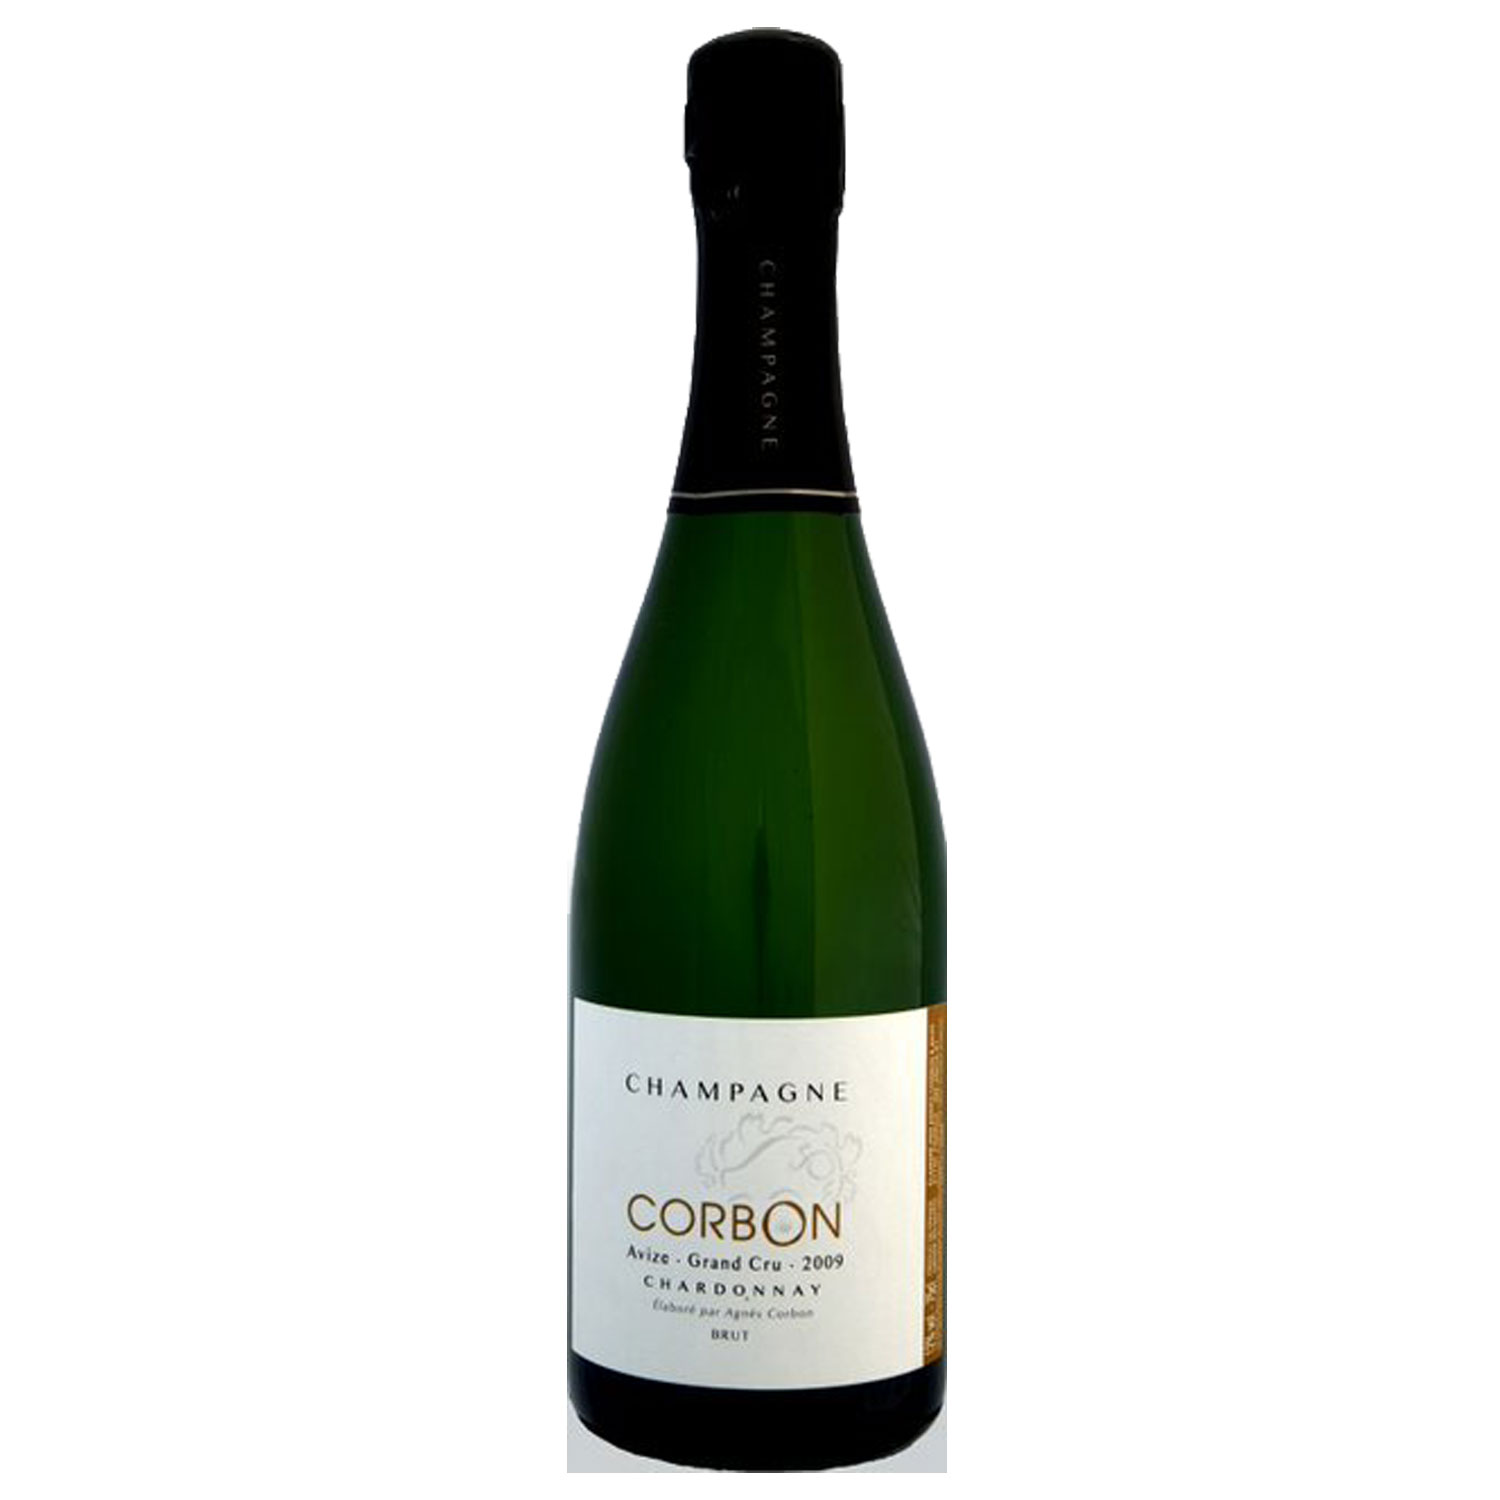 Champagne Corbon Chardonnay Millésime 2009 - Grand Cru - Avize